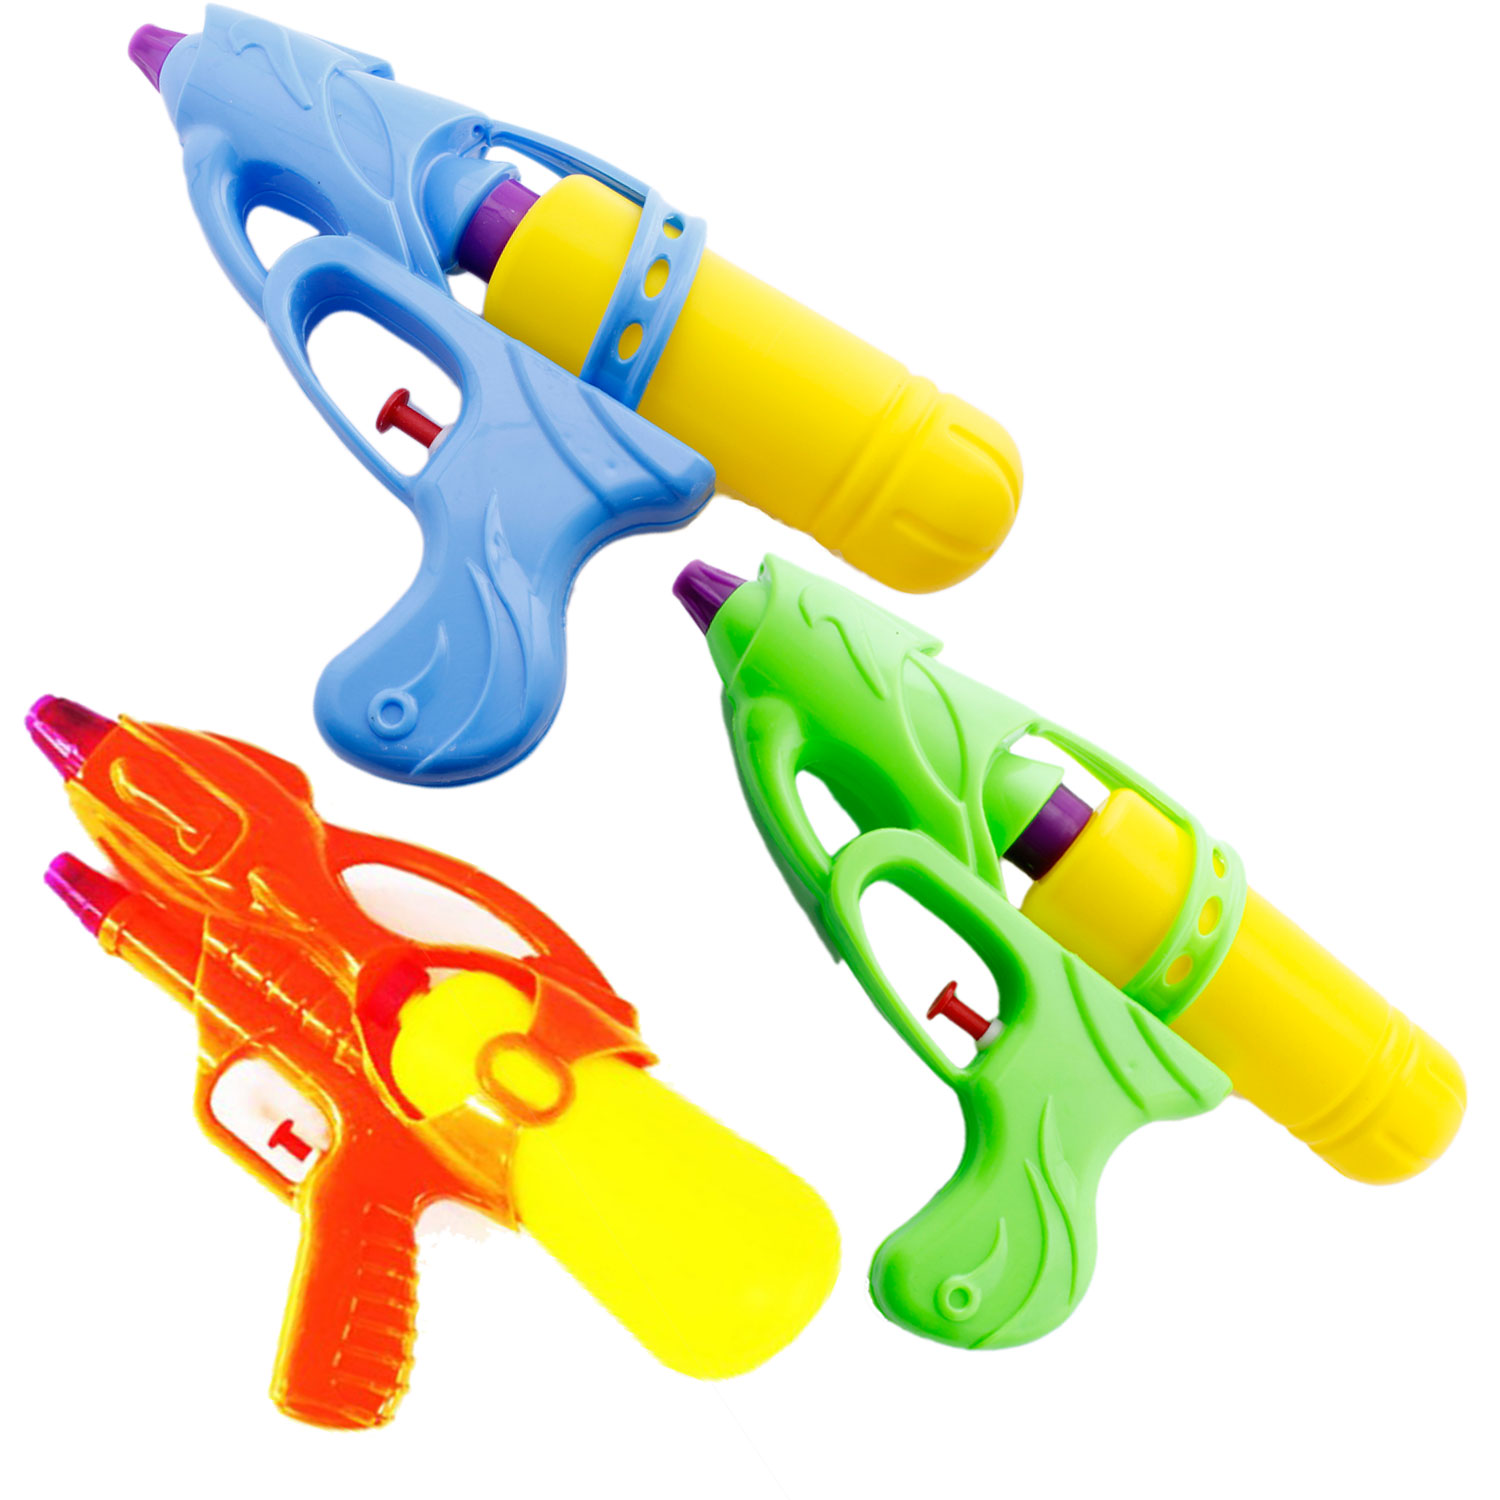 Vi̇vi̇ Toys Su Tabancası Karışık Renkli 22 CM - 52,00 TL